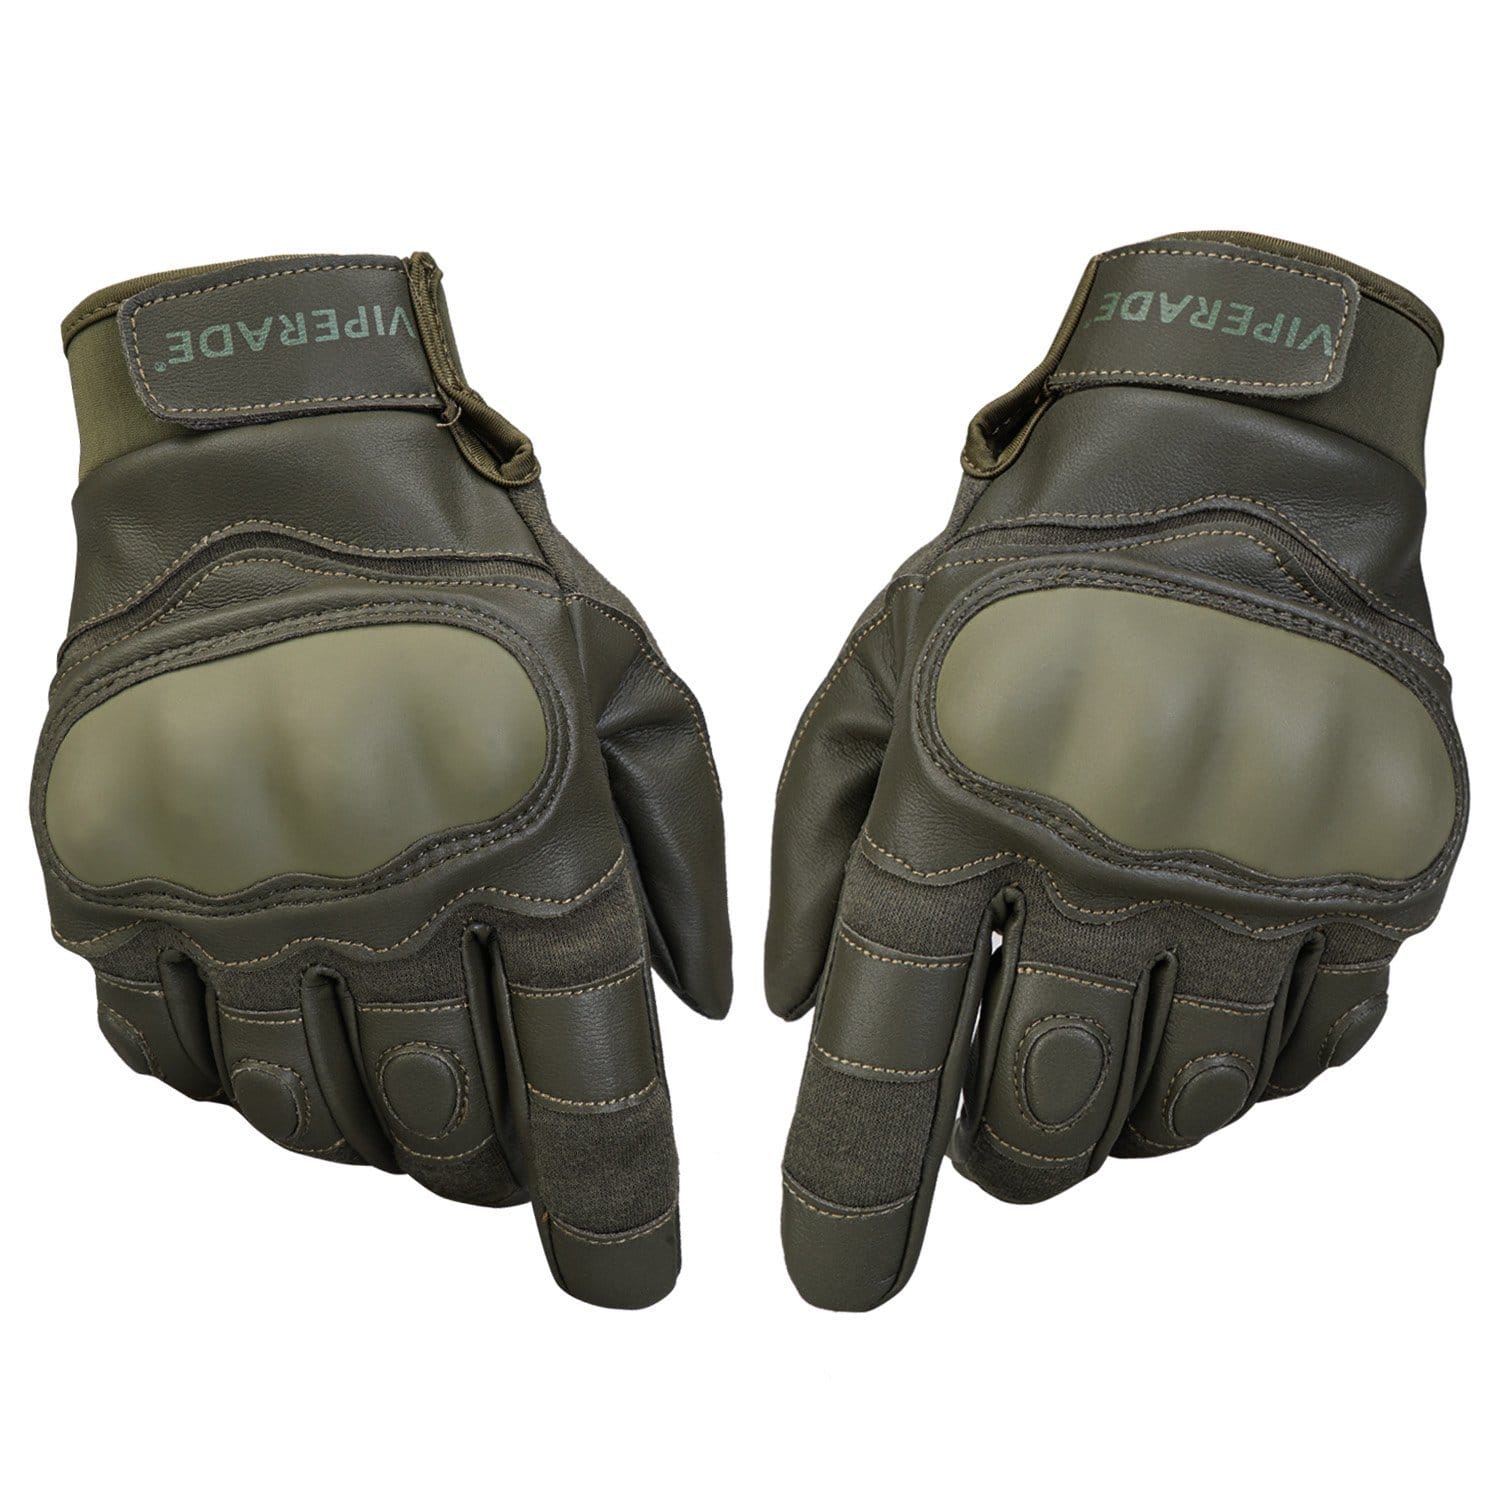 Viperade Tactical Gloves